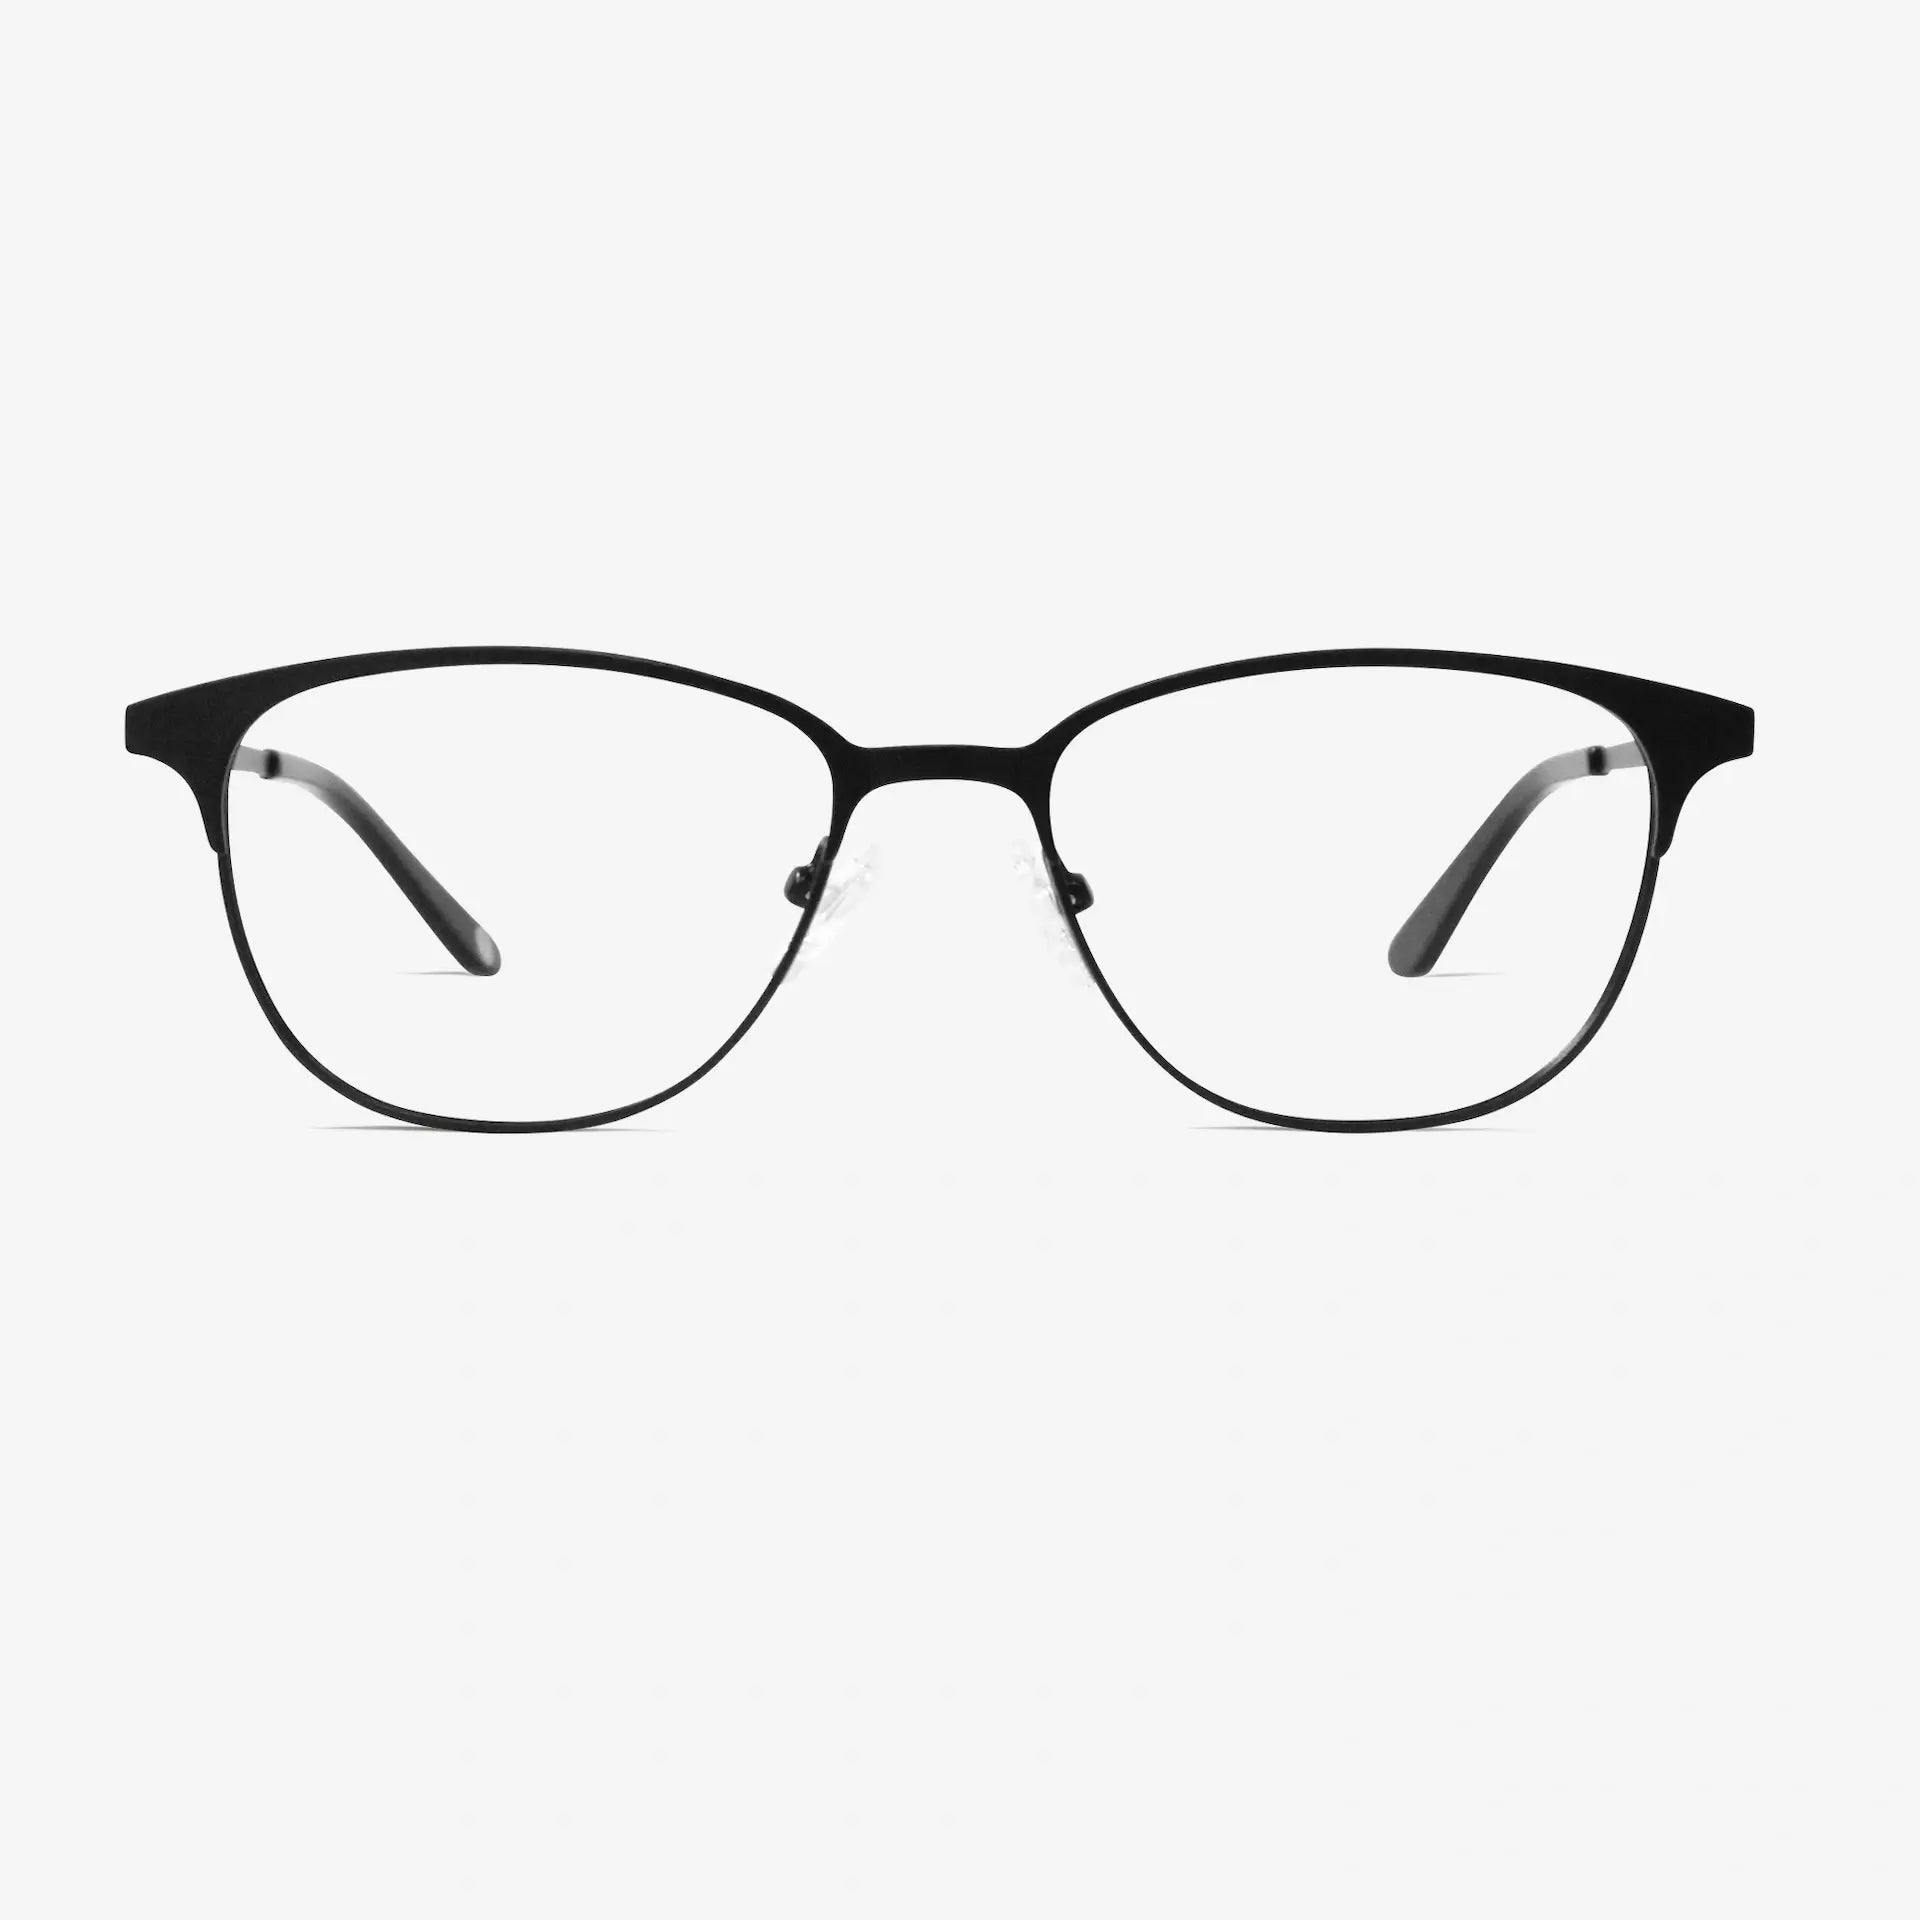 Huxley glasses | Isles Black 